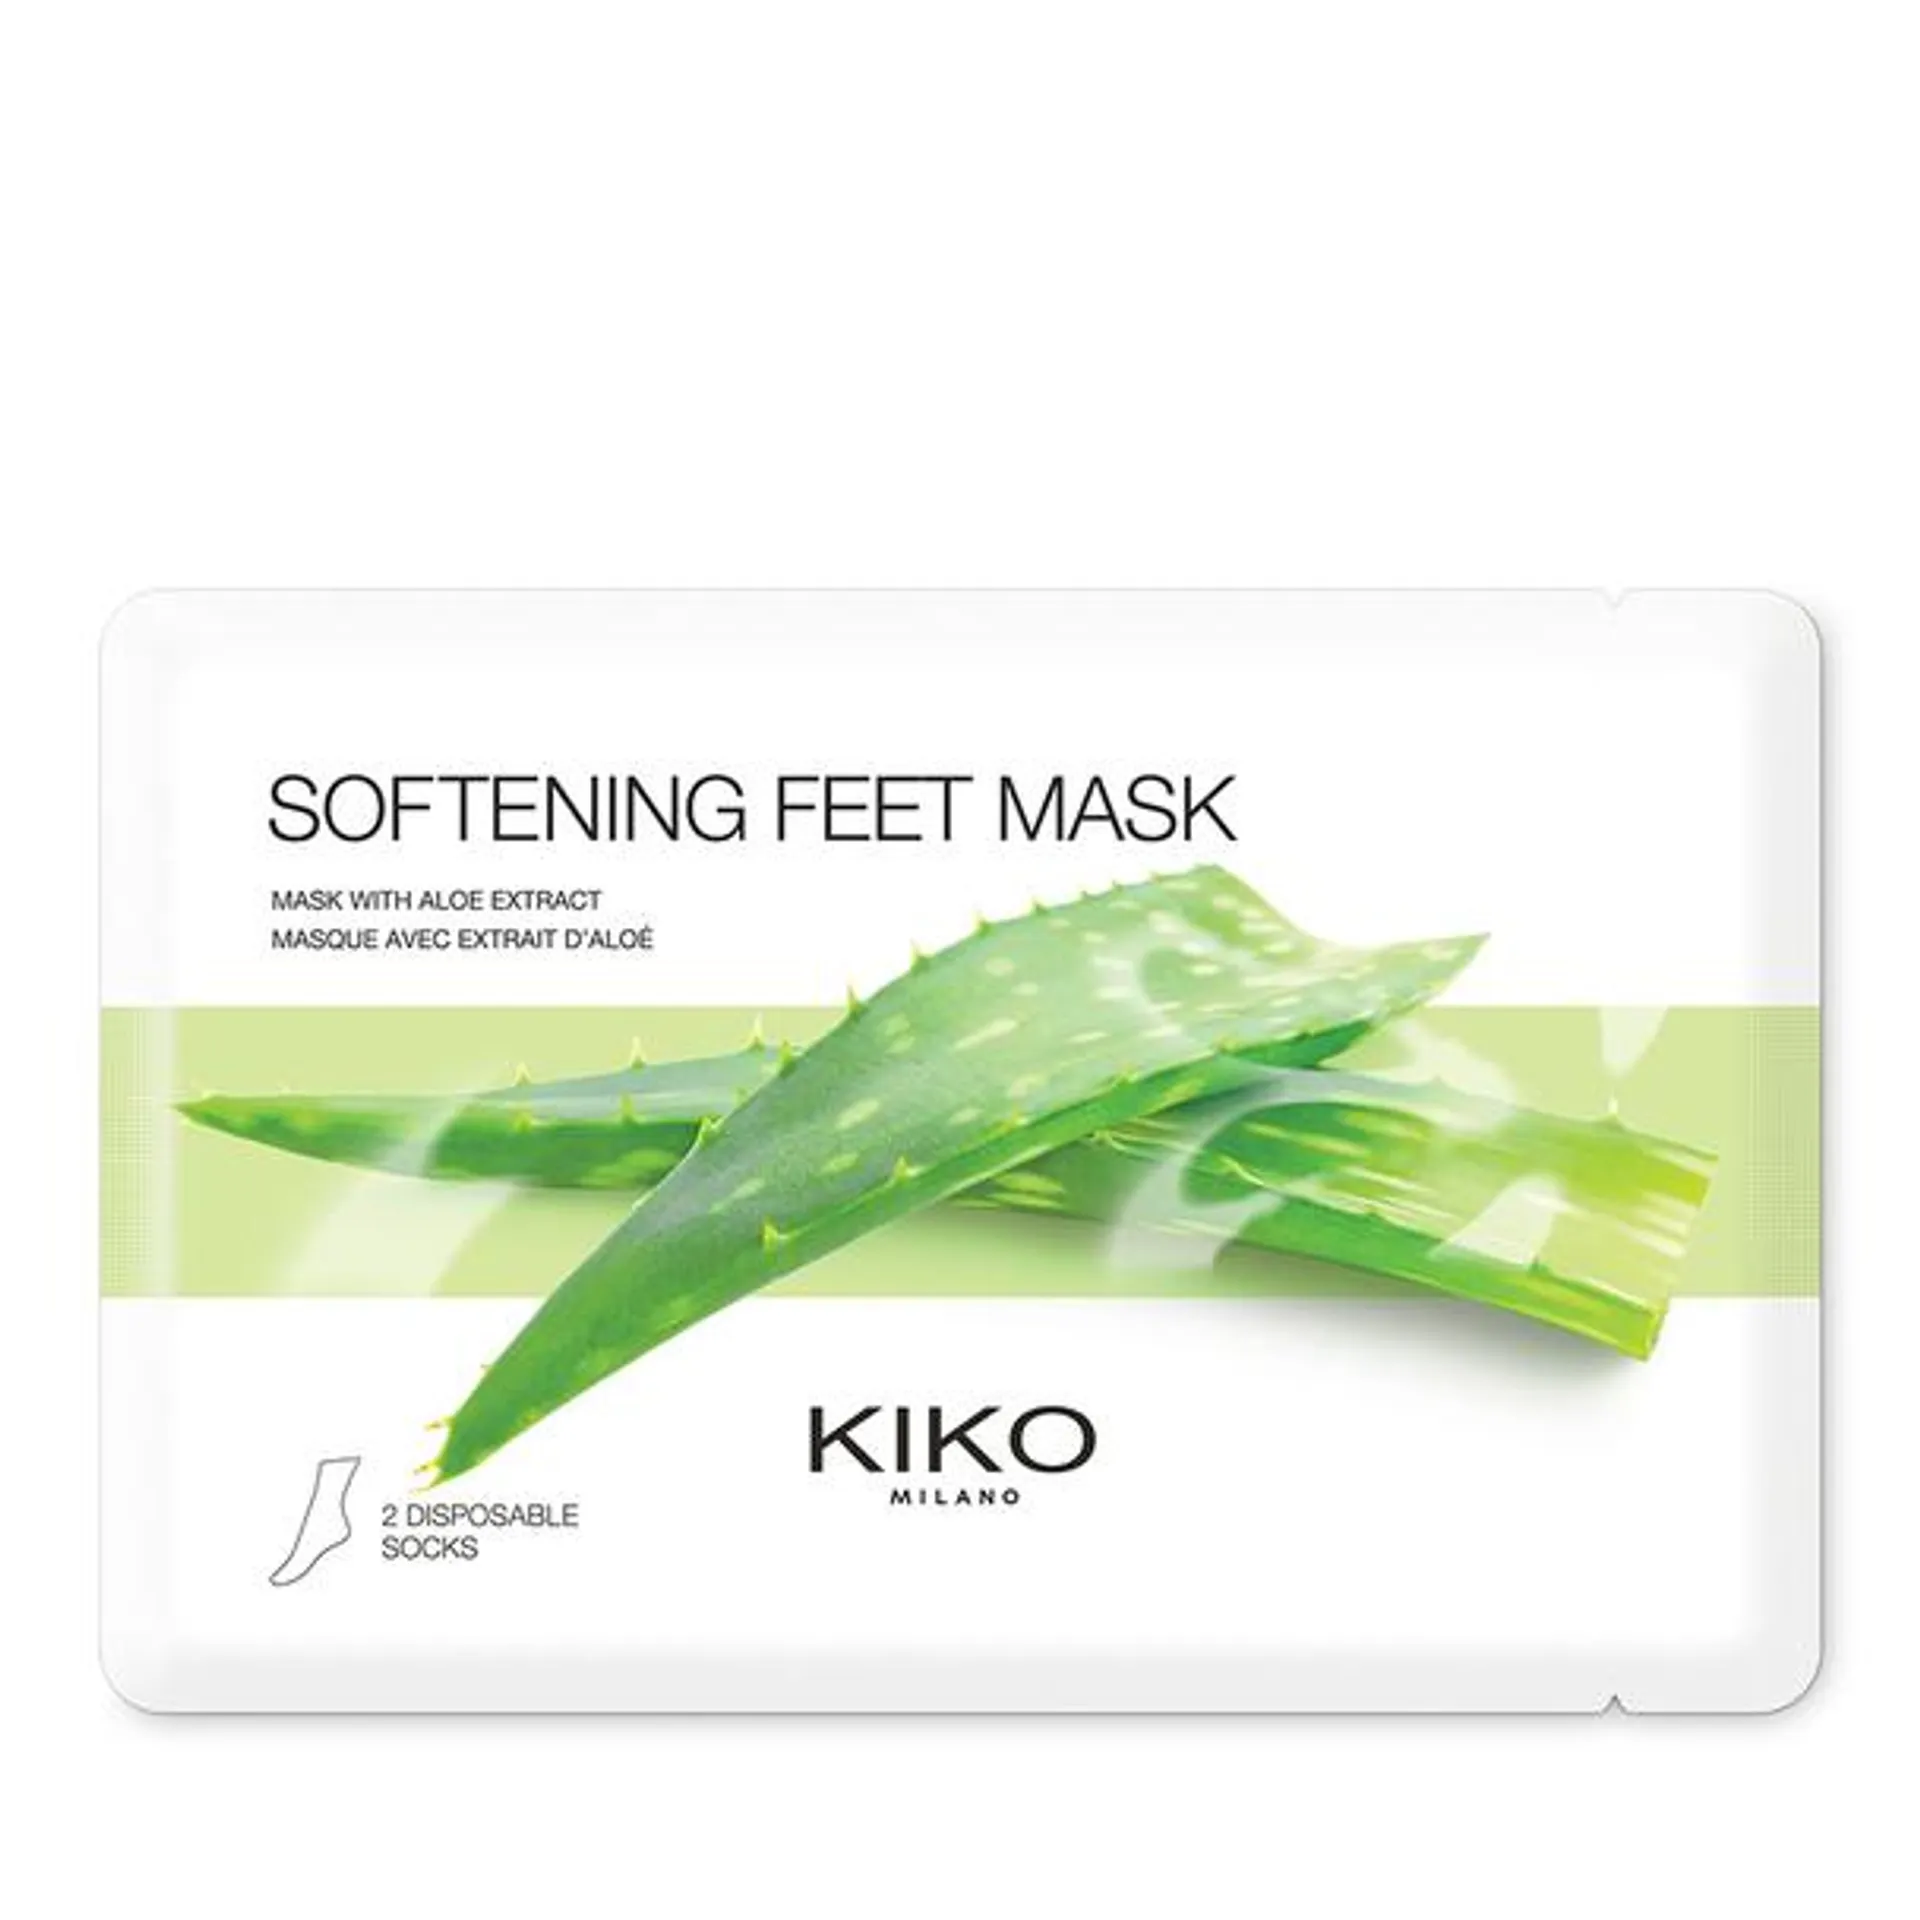 softening feet mask